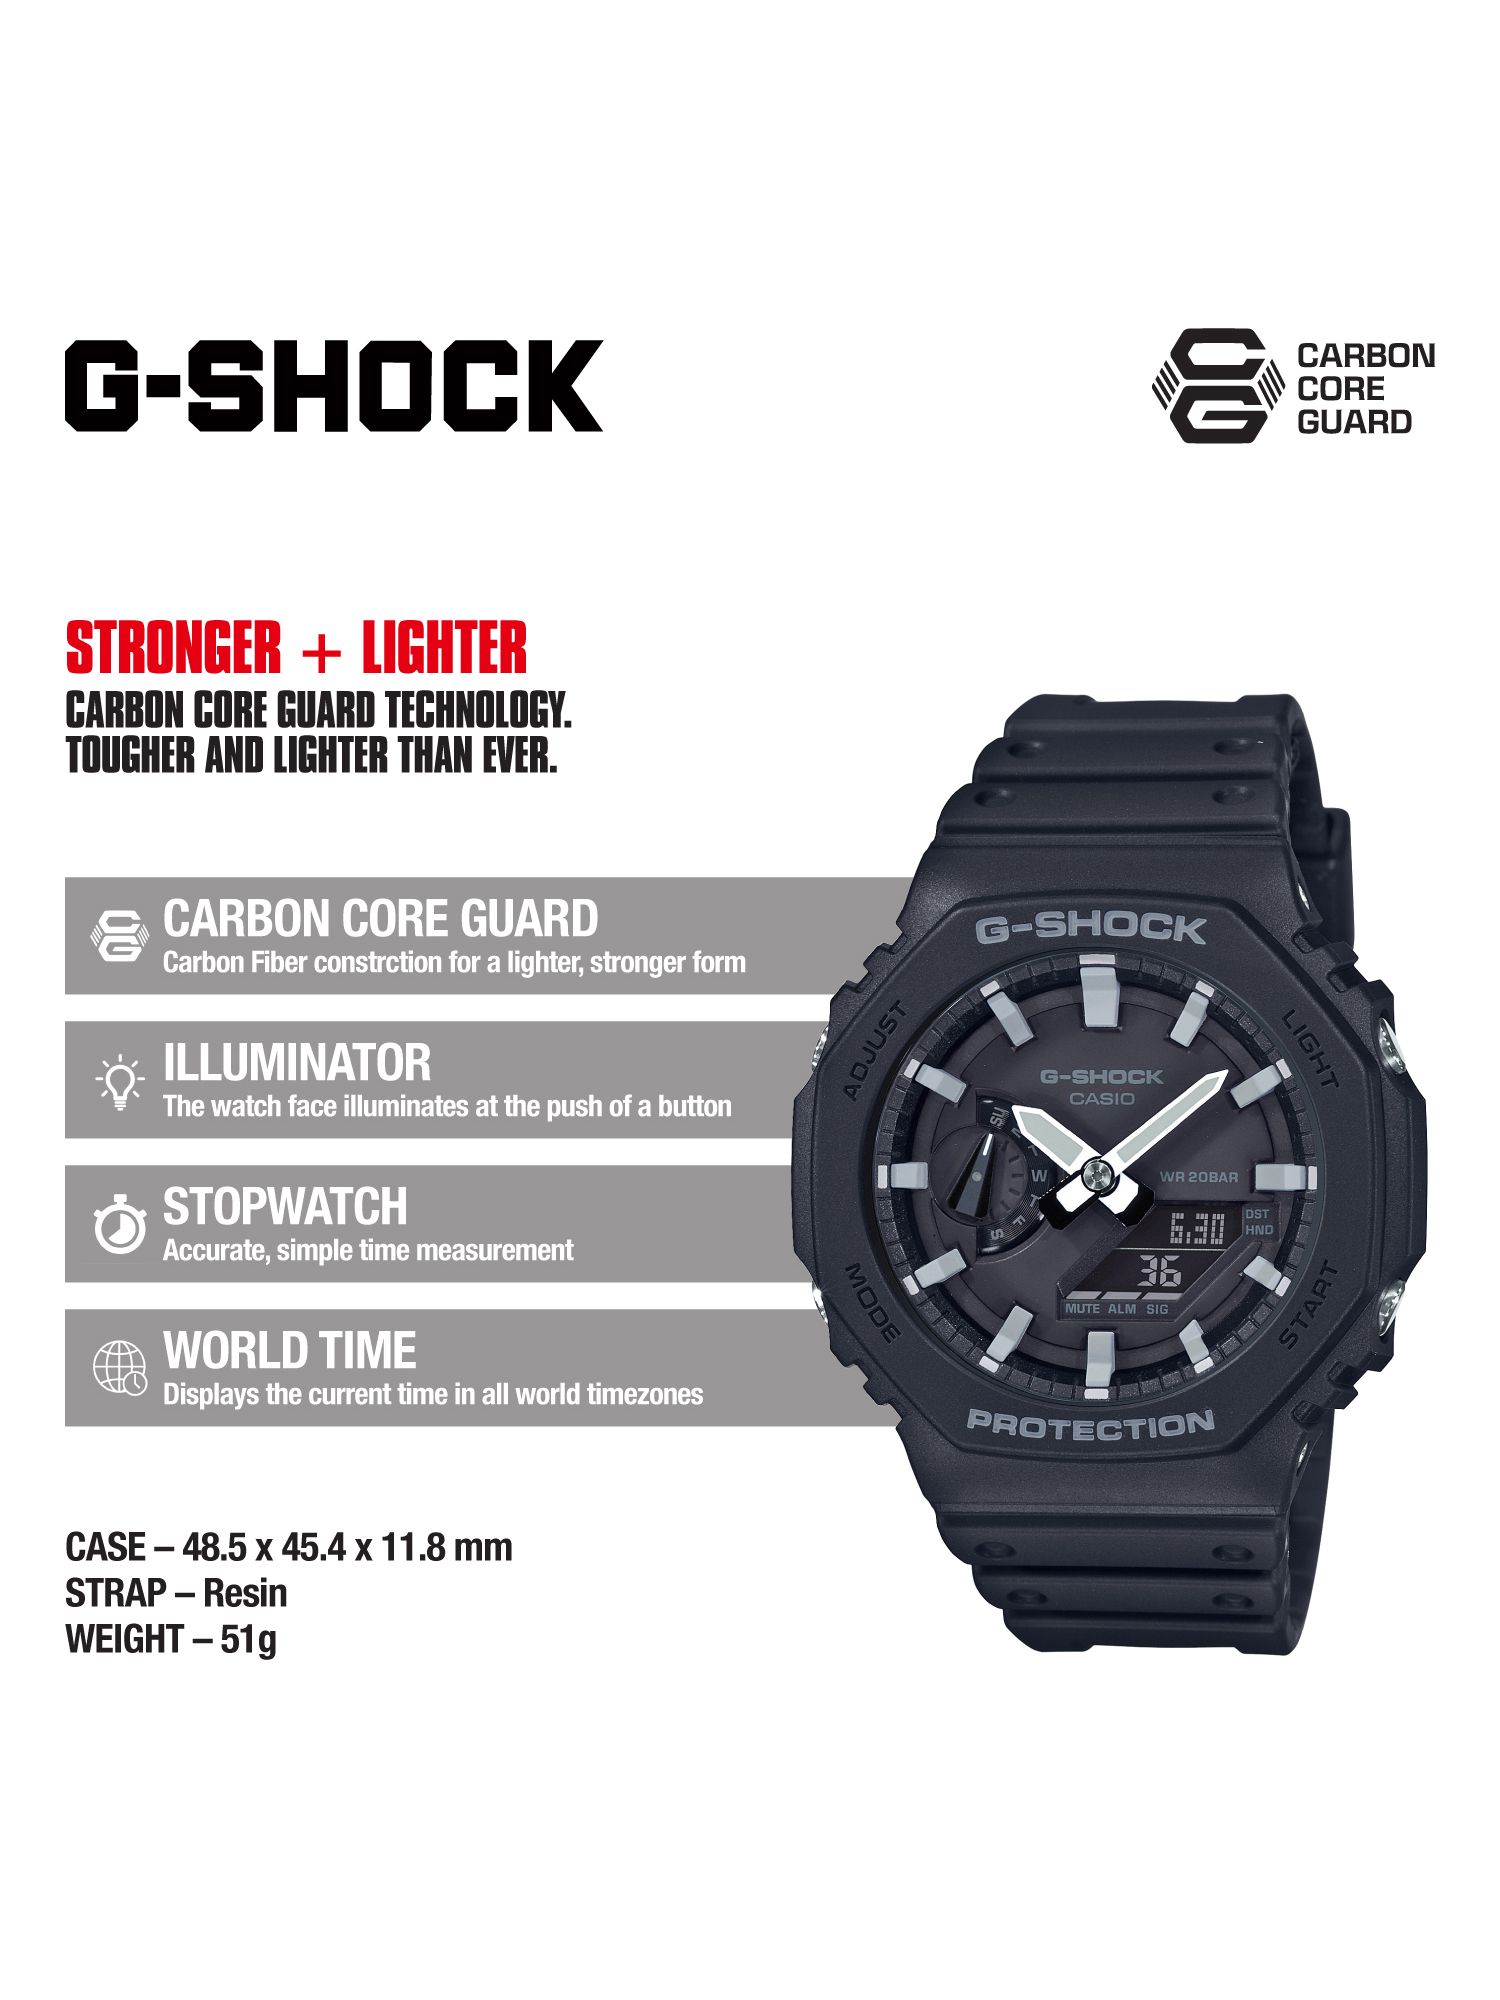 Buy Casio Men's G-Shock Day Resin Strap Watch Online at johnlewis.com